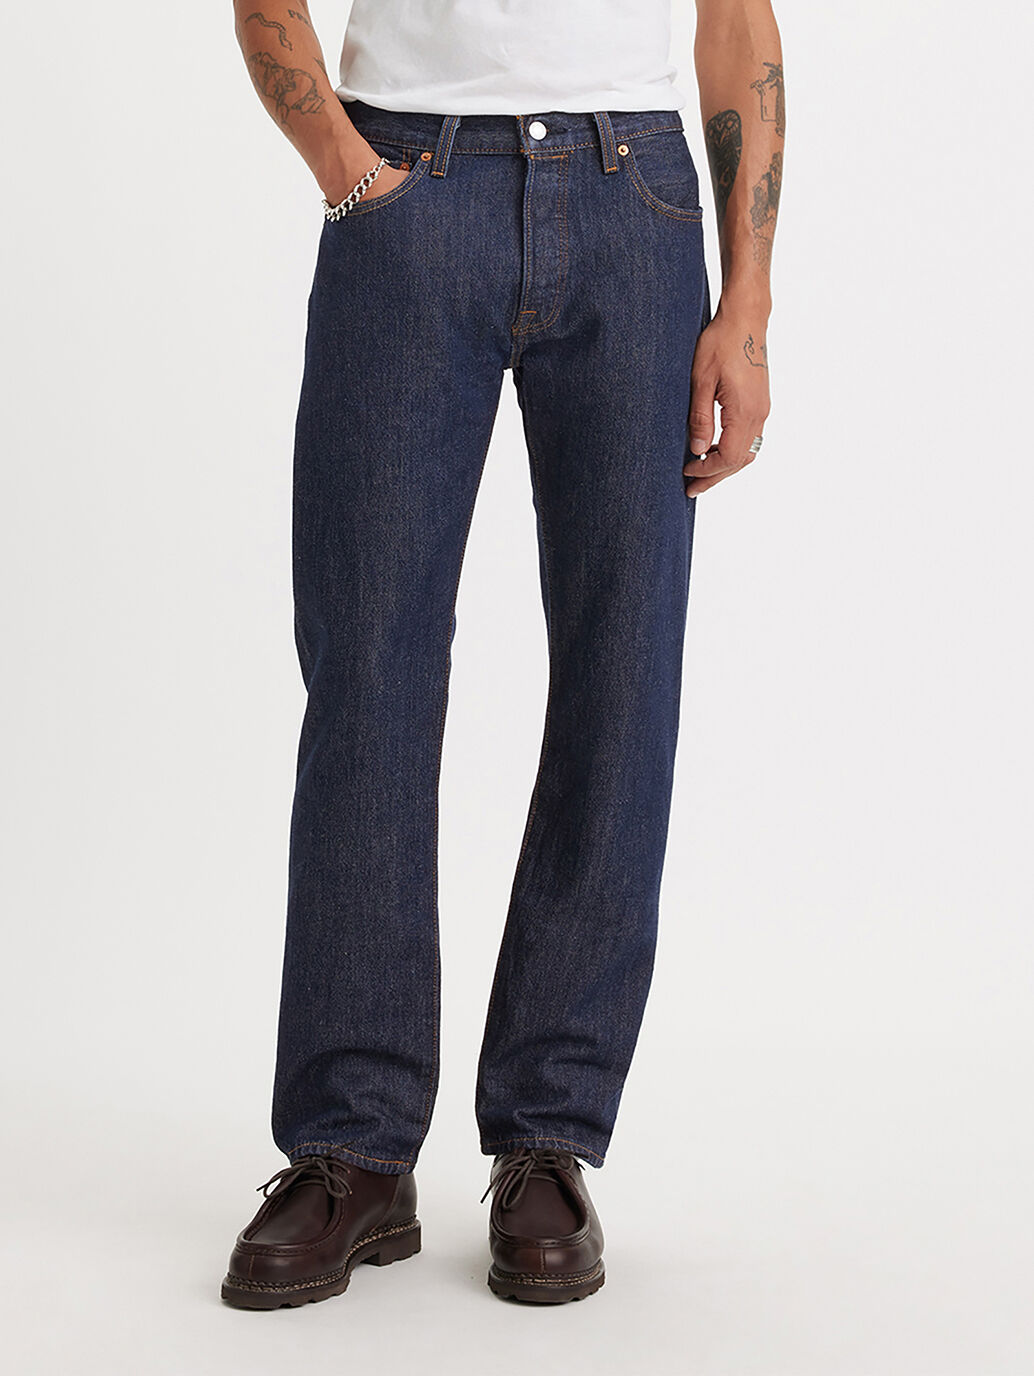 Levi's® Men's 501® Original Jeans - Rinse